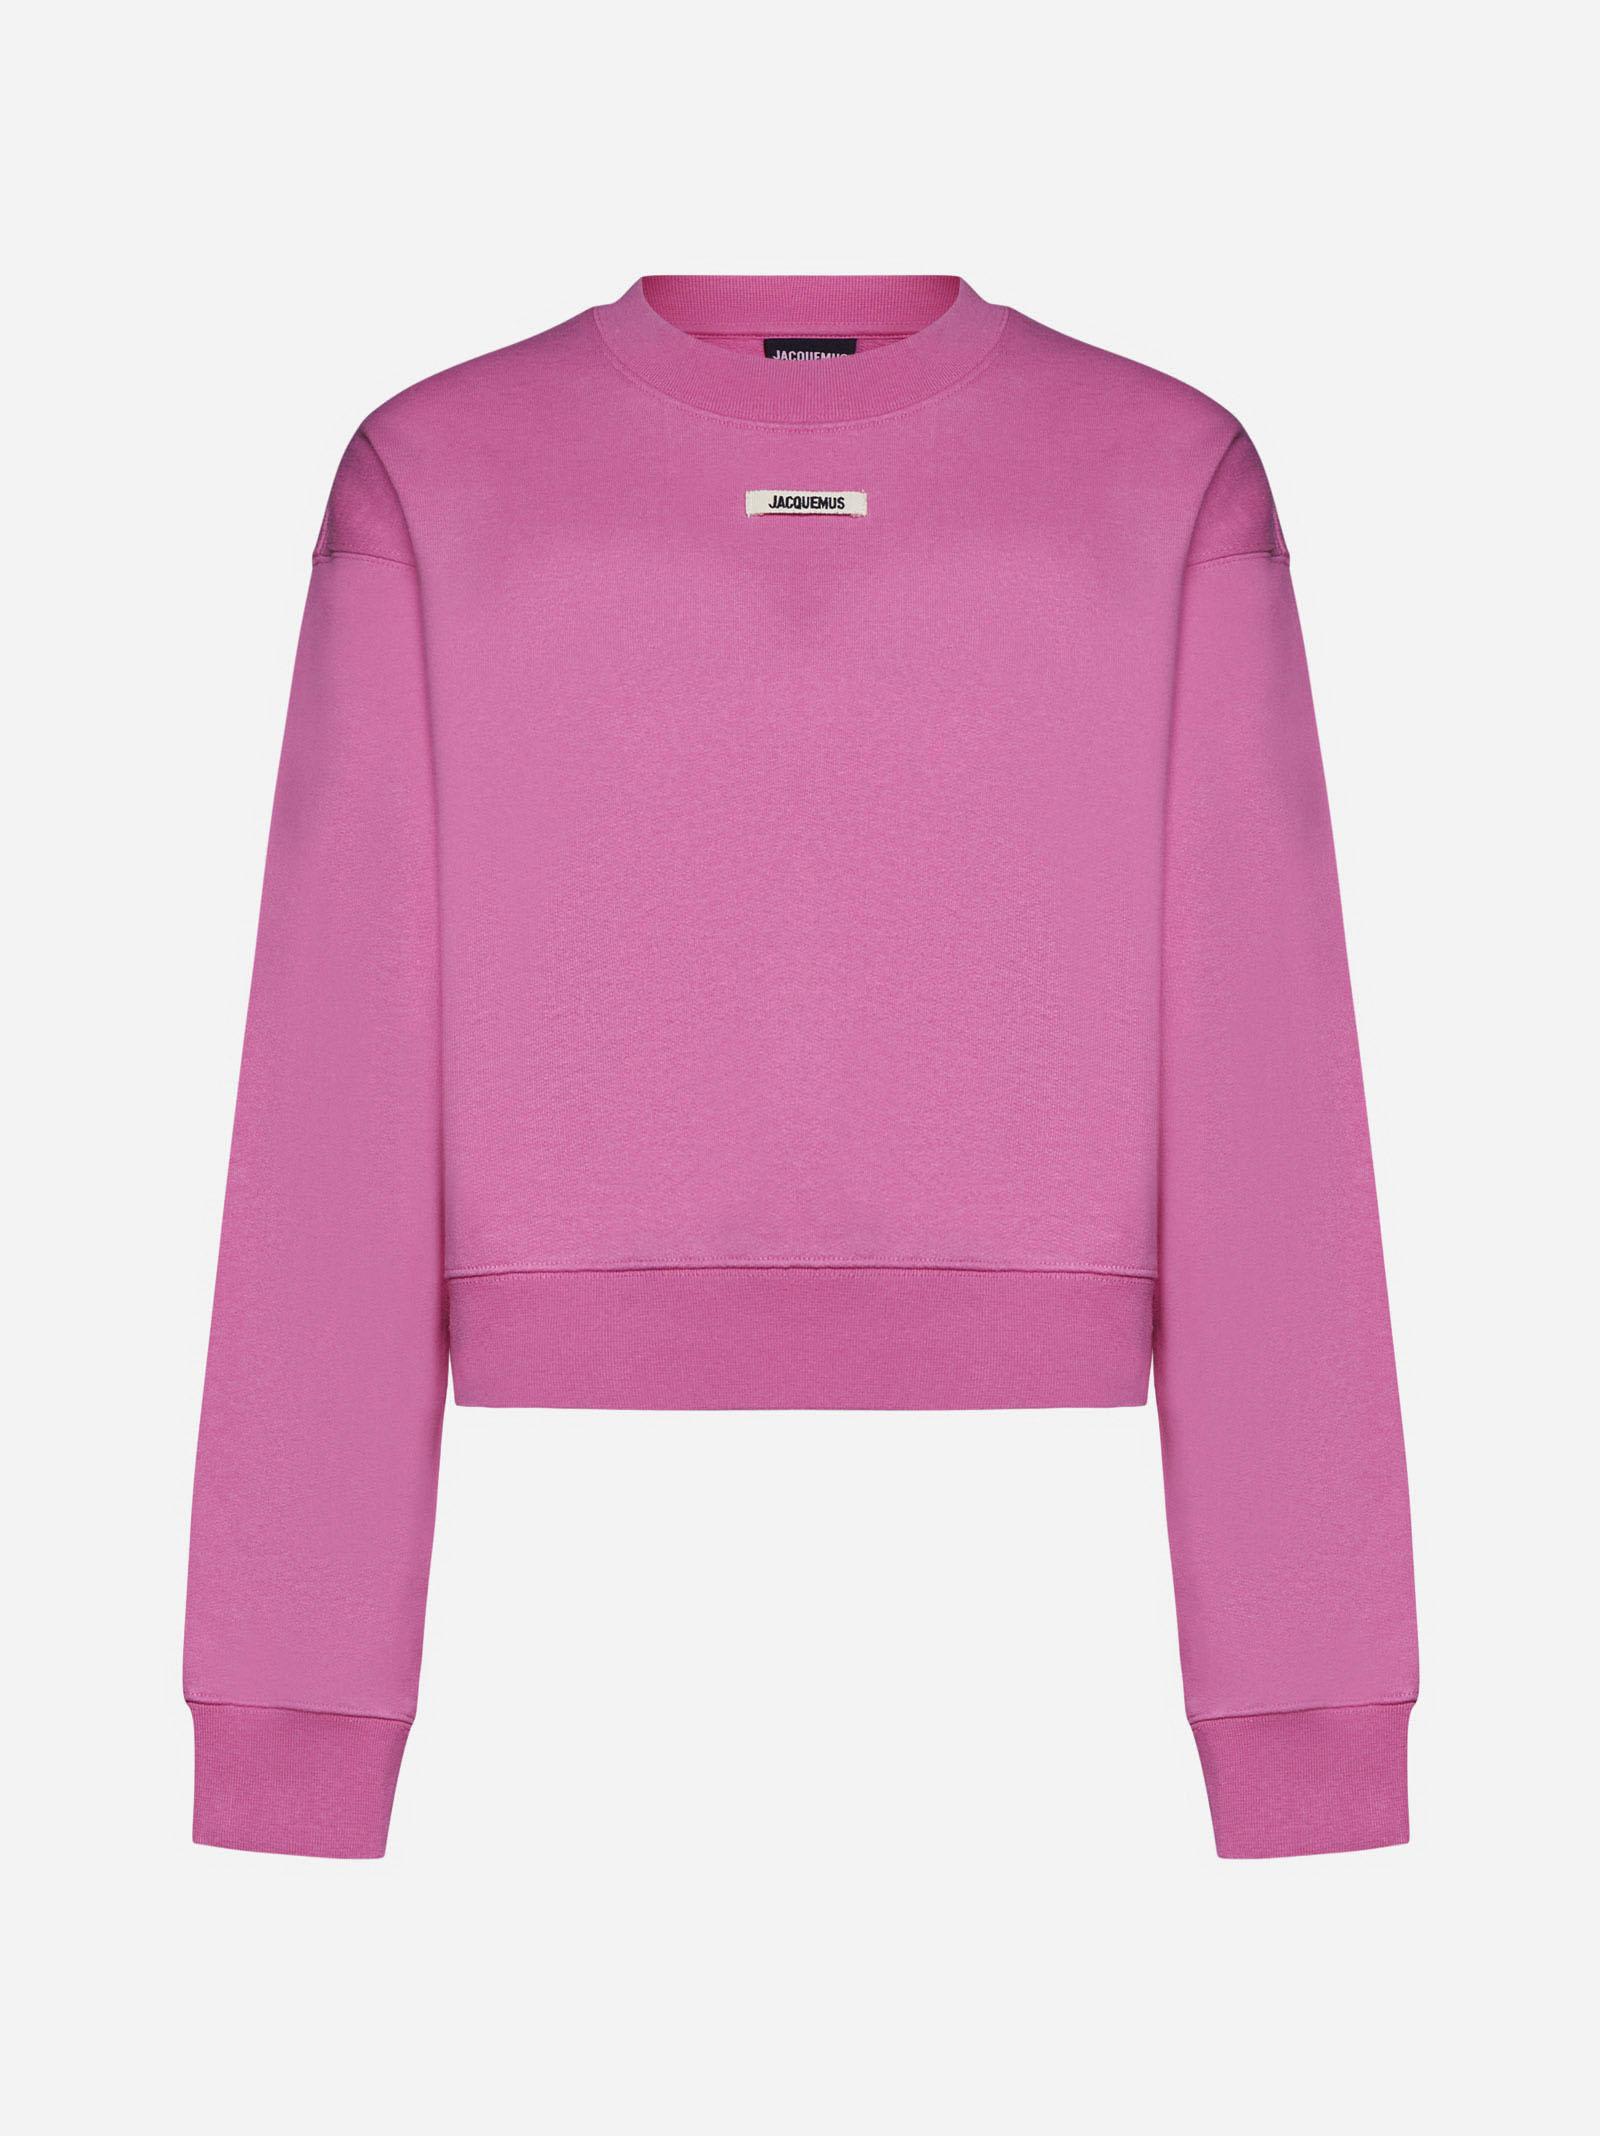 Shop Jacquemus Gros Grain Cotton Sweatshirt In Pink